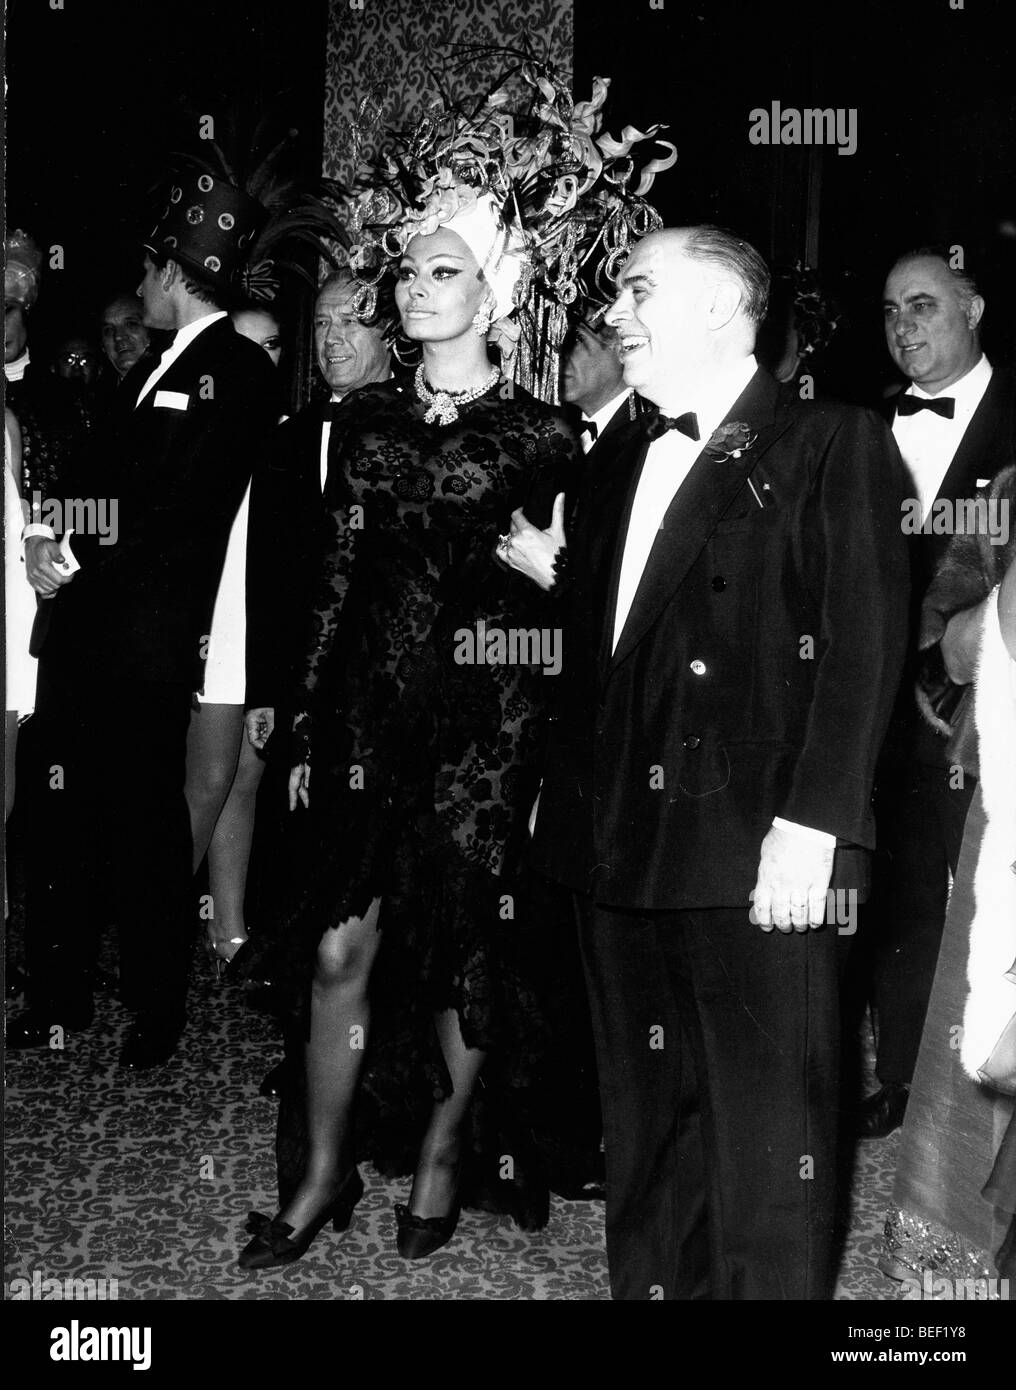 Actress Sophia Loren at ball with Carlo Ponti Stock Photo